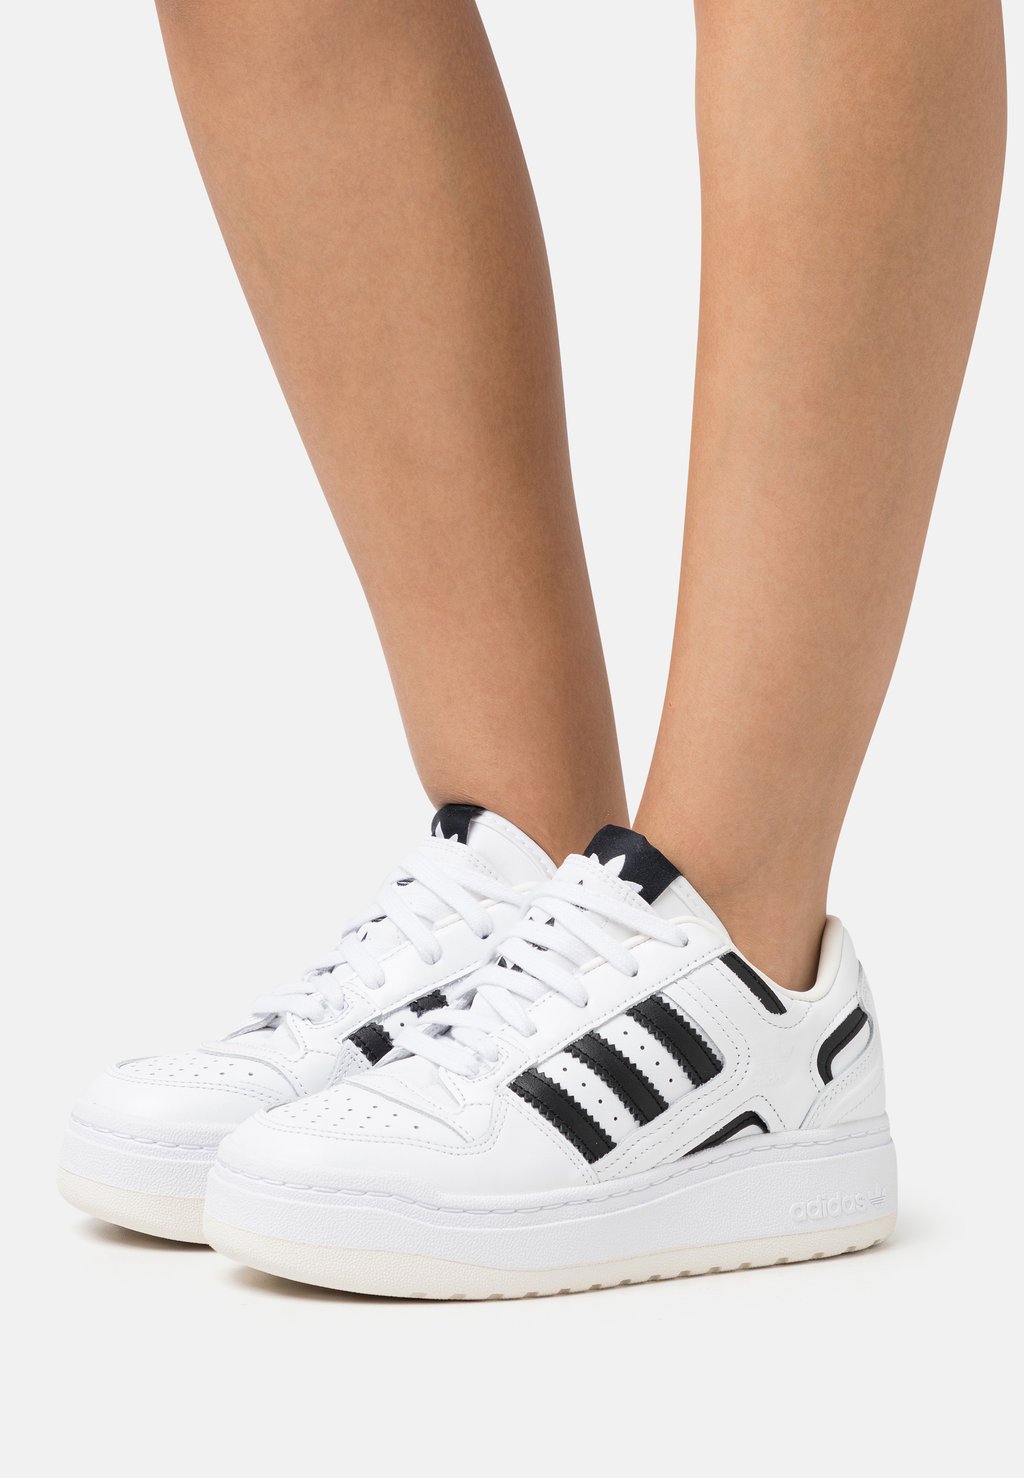 Кроссовки adidas Originals сандалии adidas adilette цвет footwear white core black footwear white